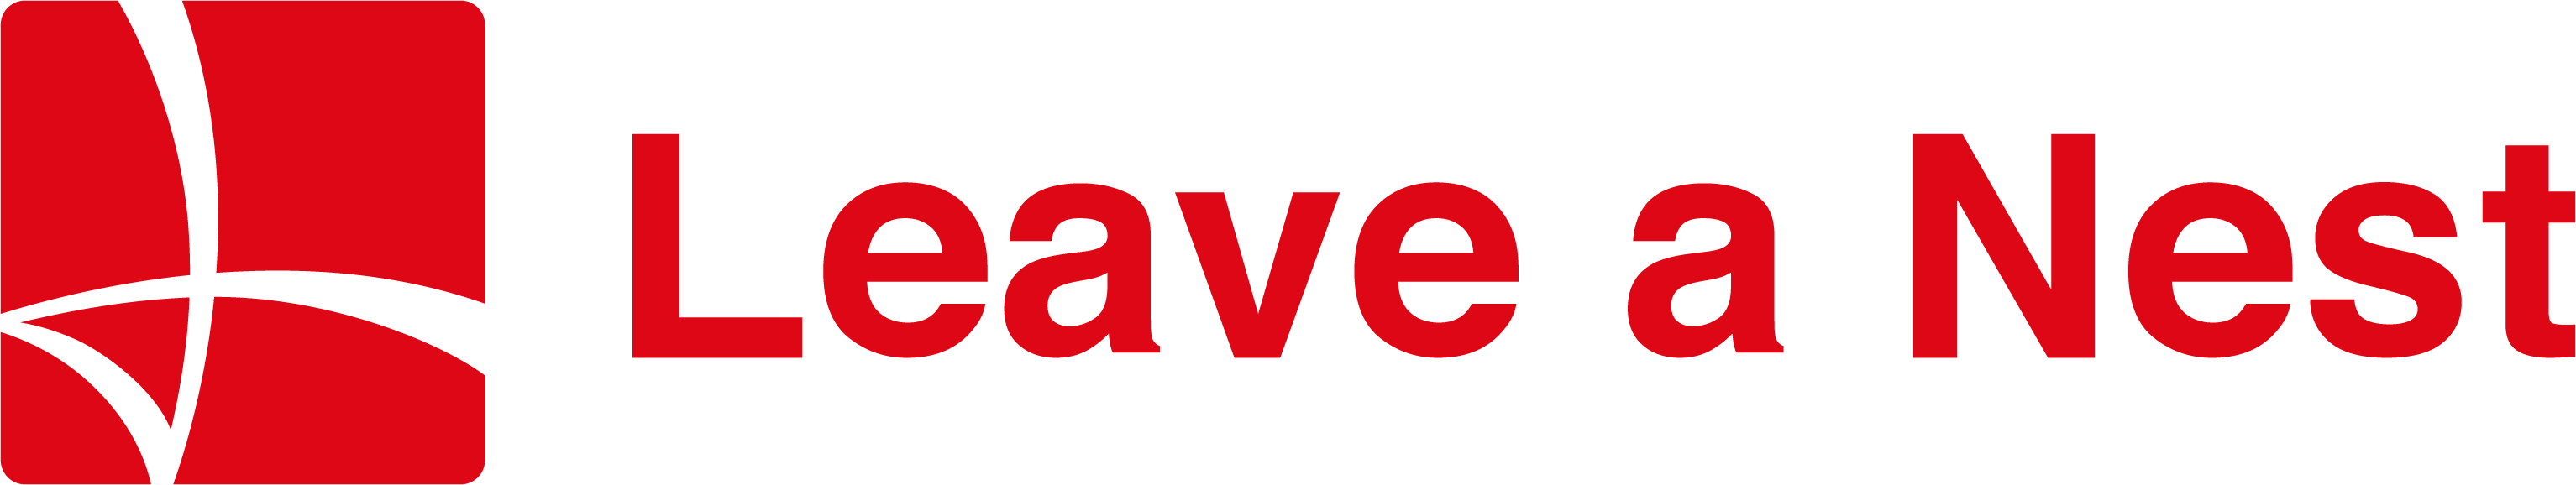 Leave a nest logo